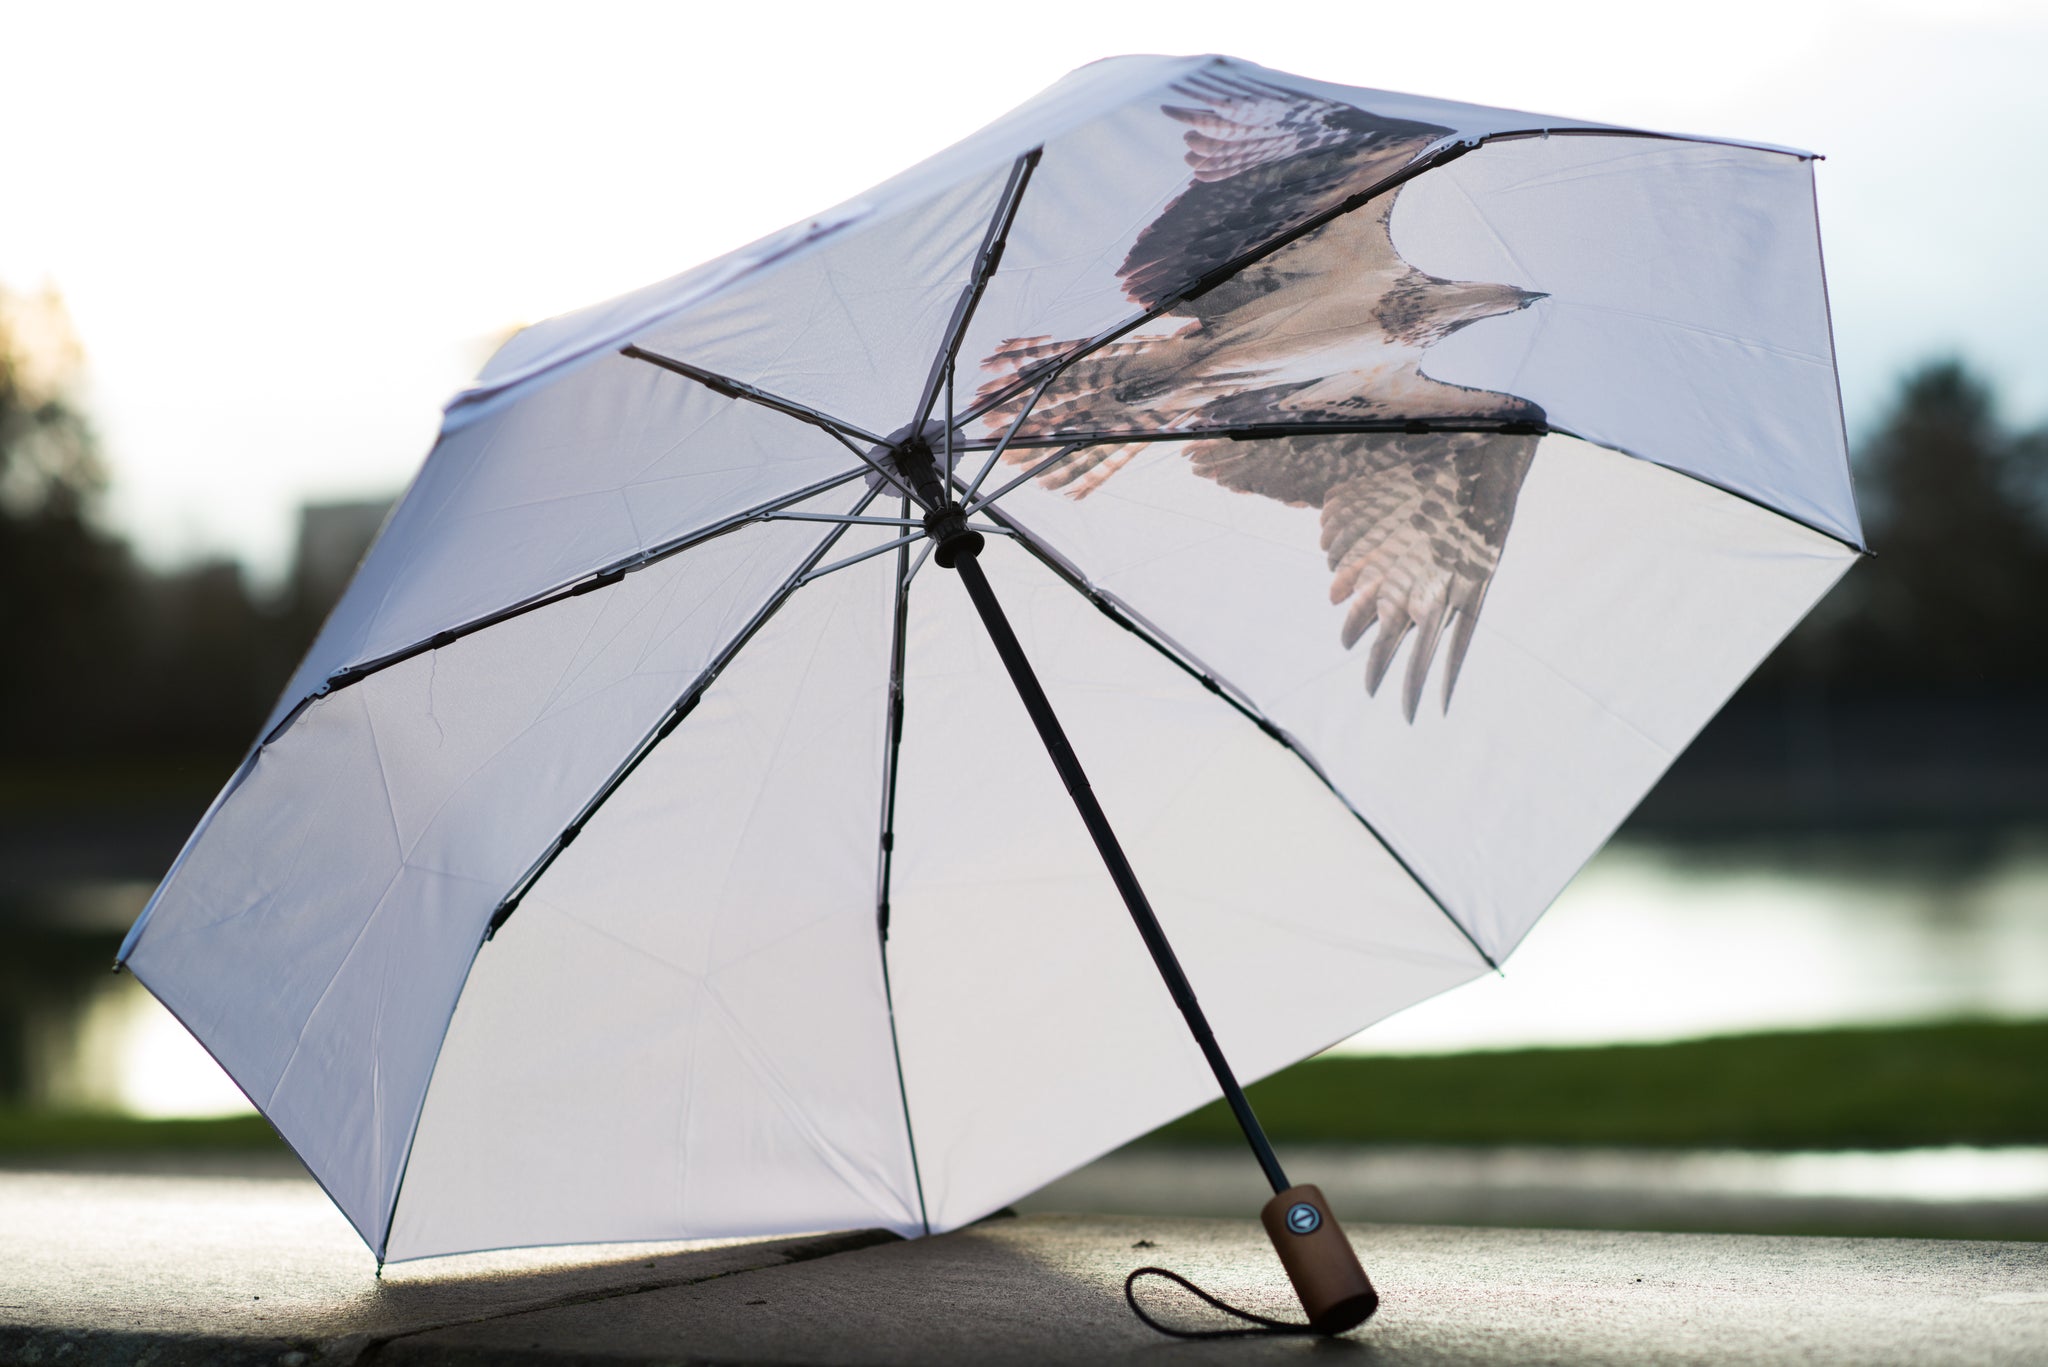 Osprey Umbrella